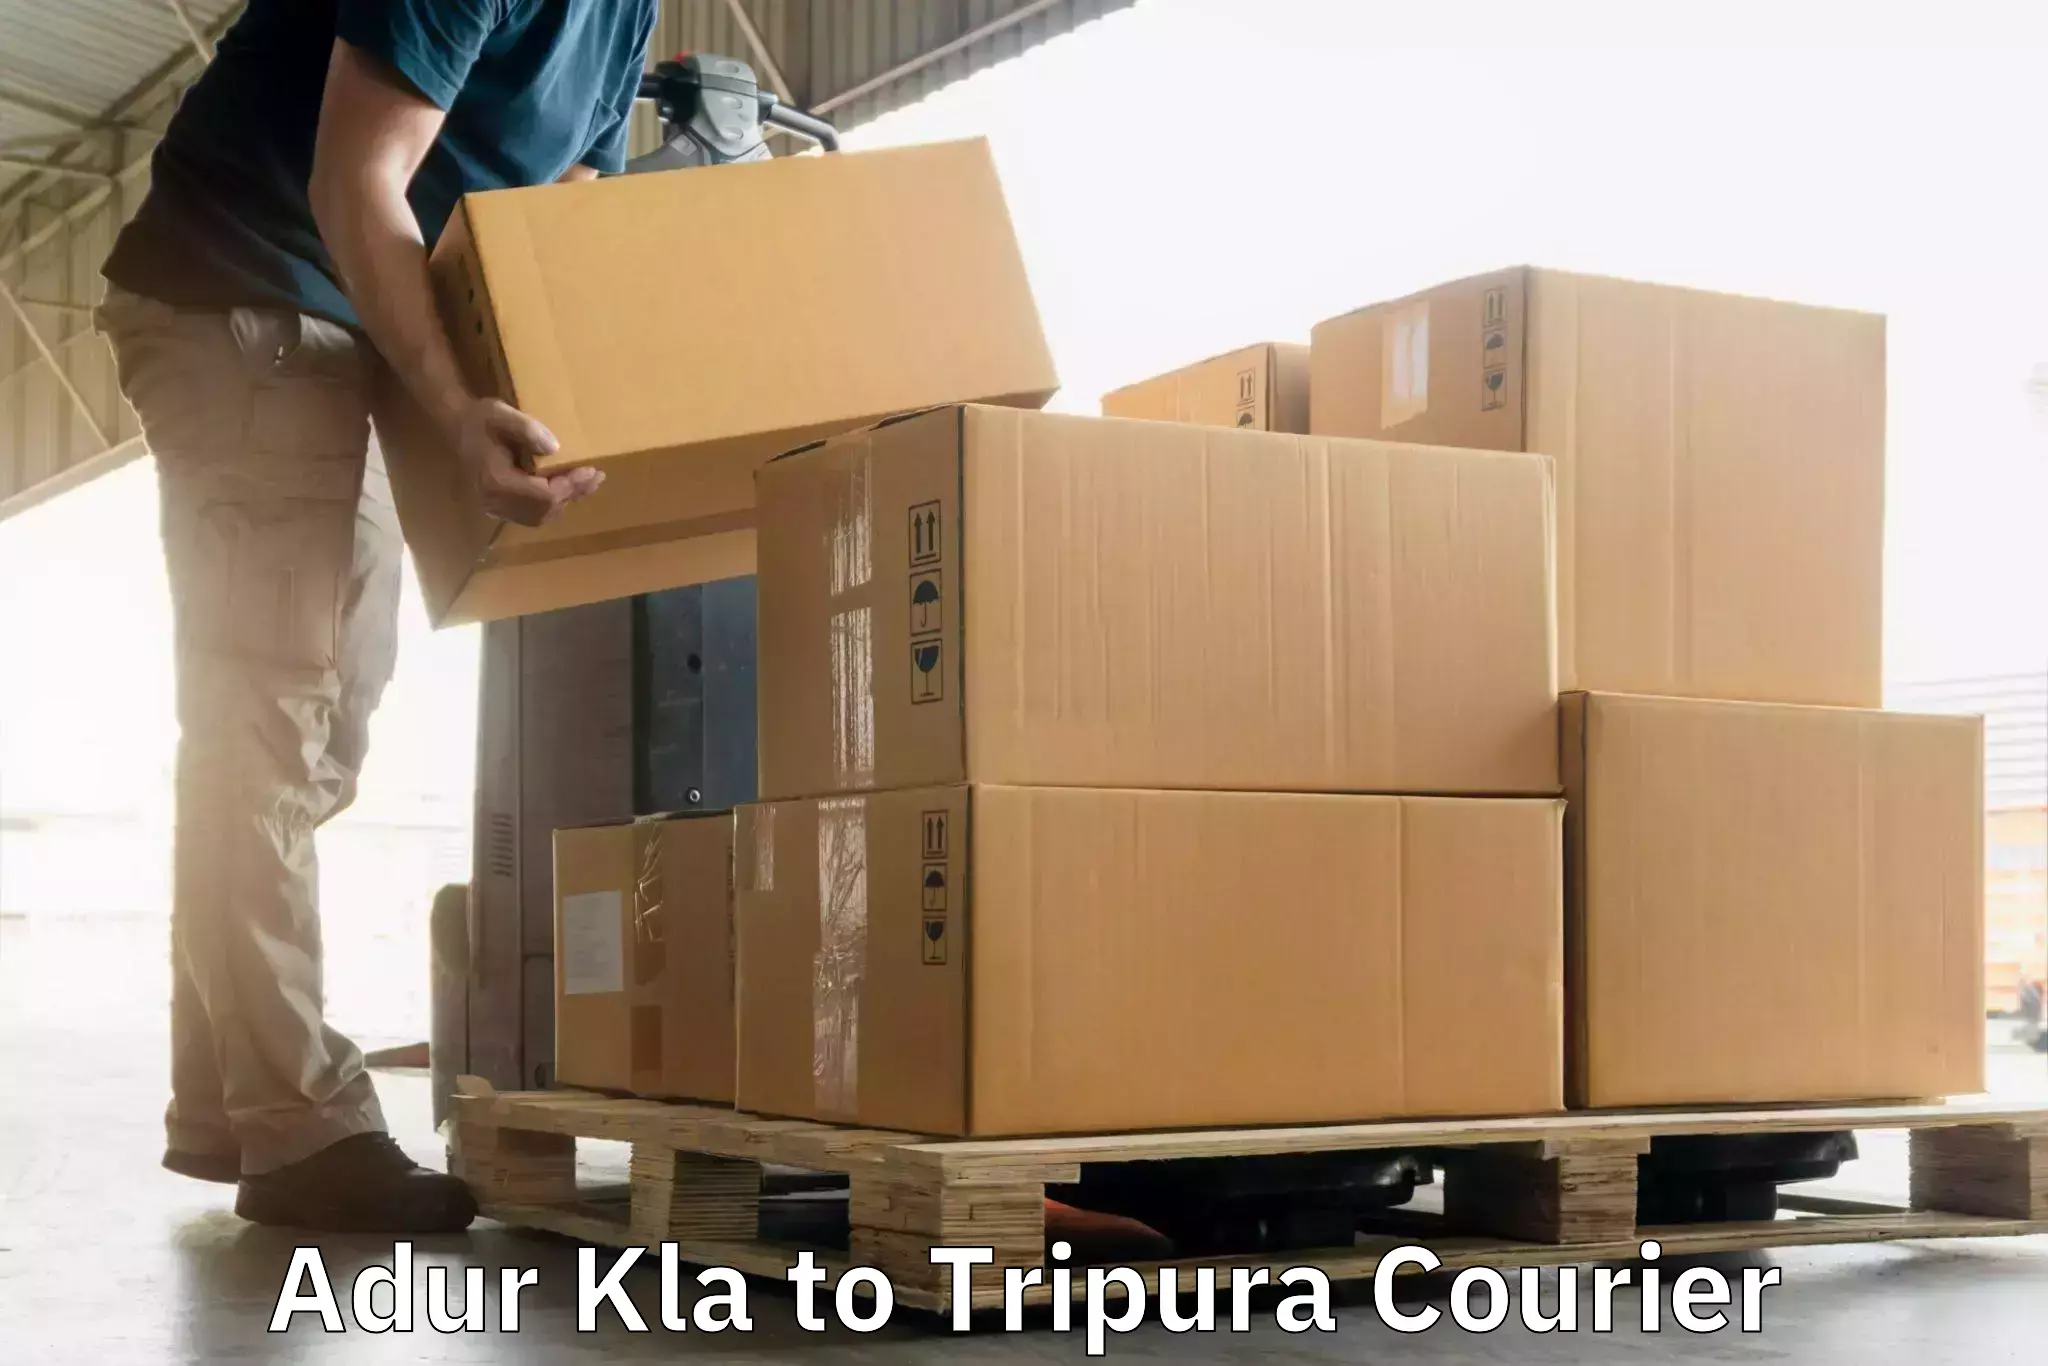 Efficient order fulfillment in Adur Kla to Tripura